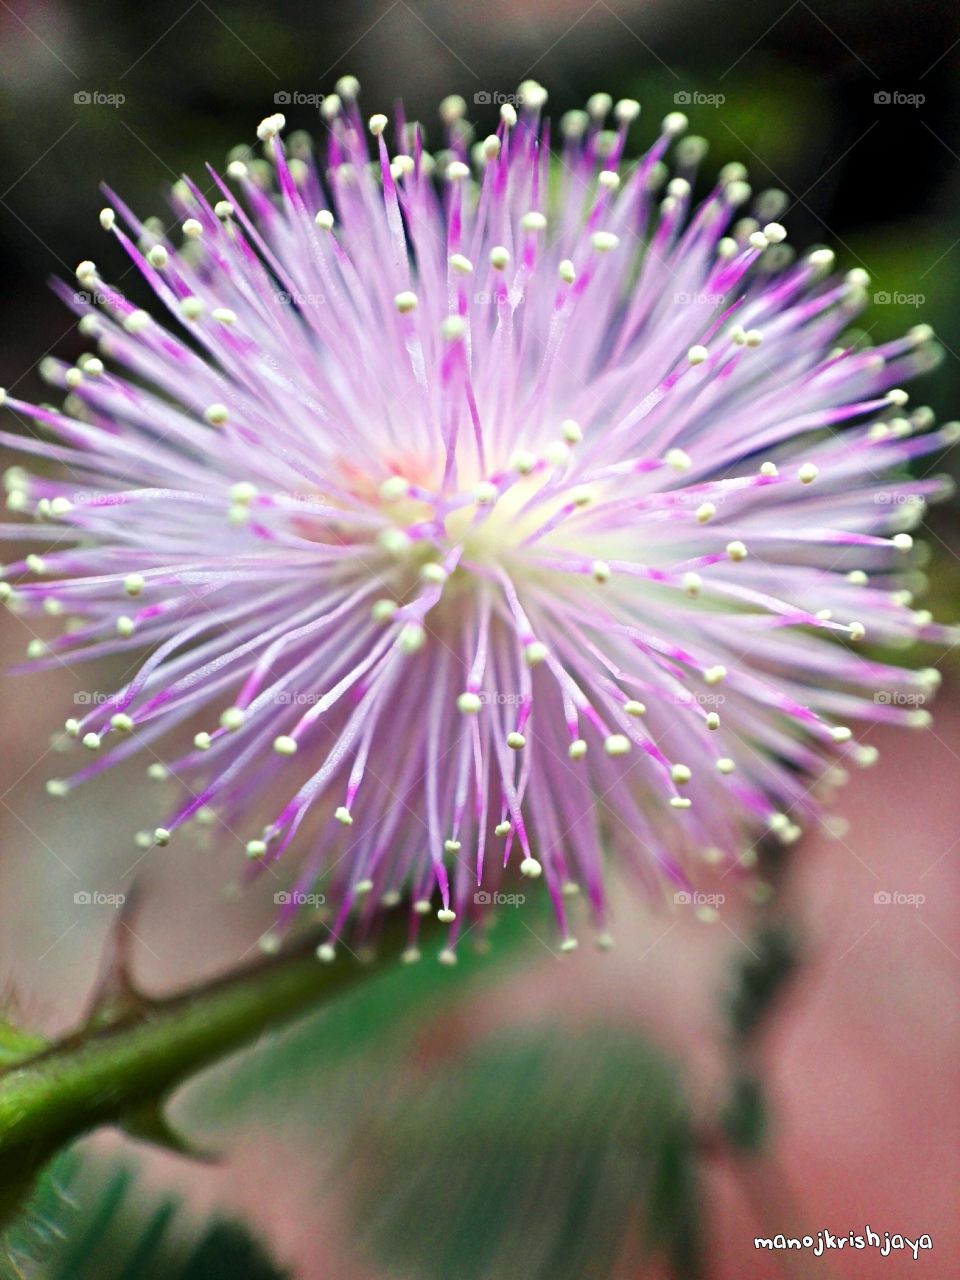 Flower of sensitive plant